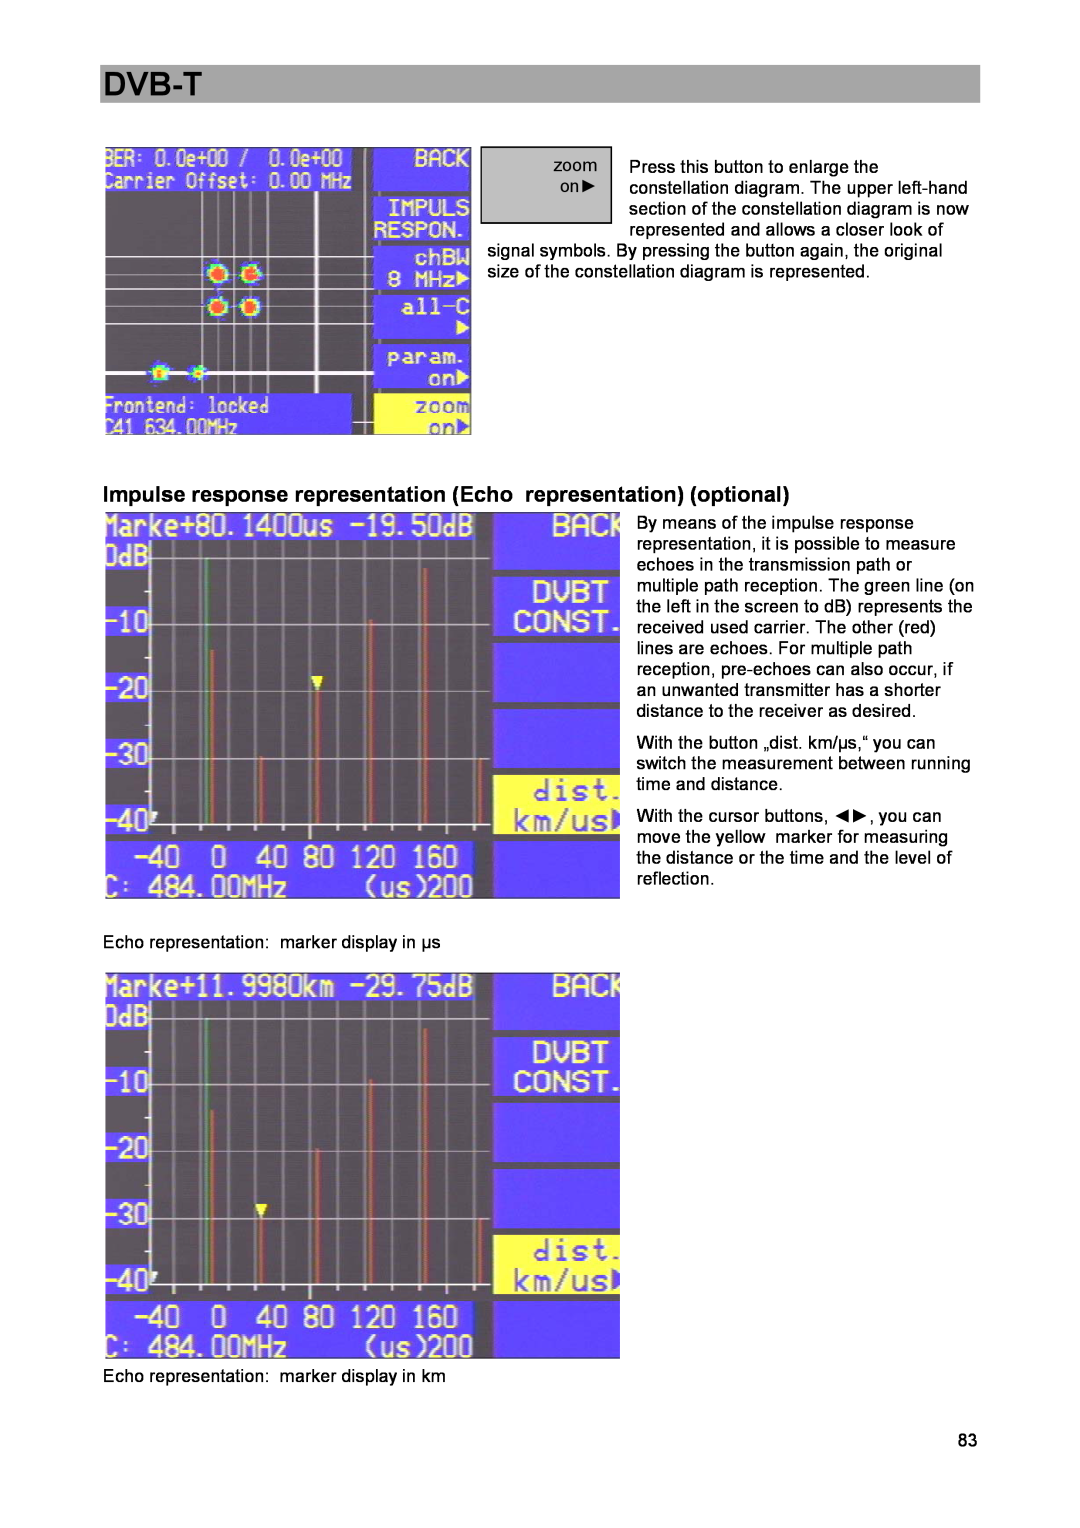 DreamGEAR MSK 33 manual Impulse response representation Echo representation optional, Dvb-T 